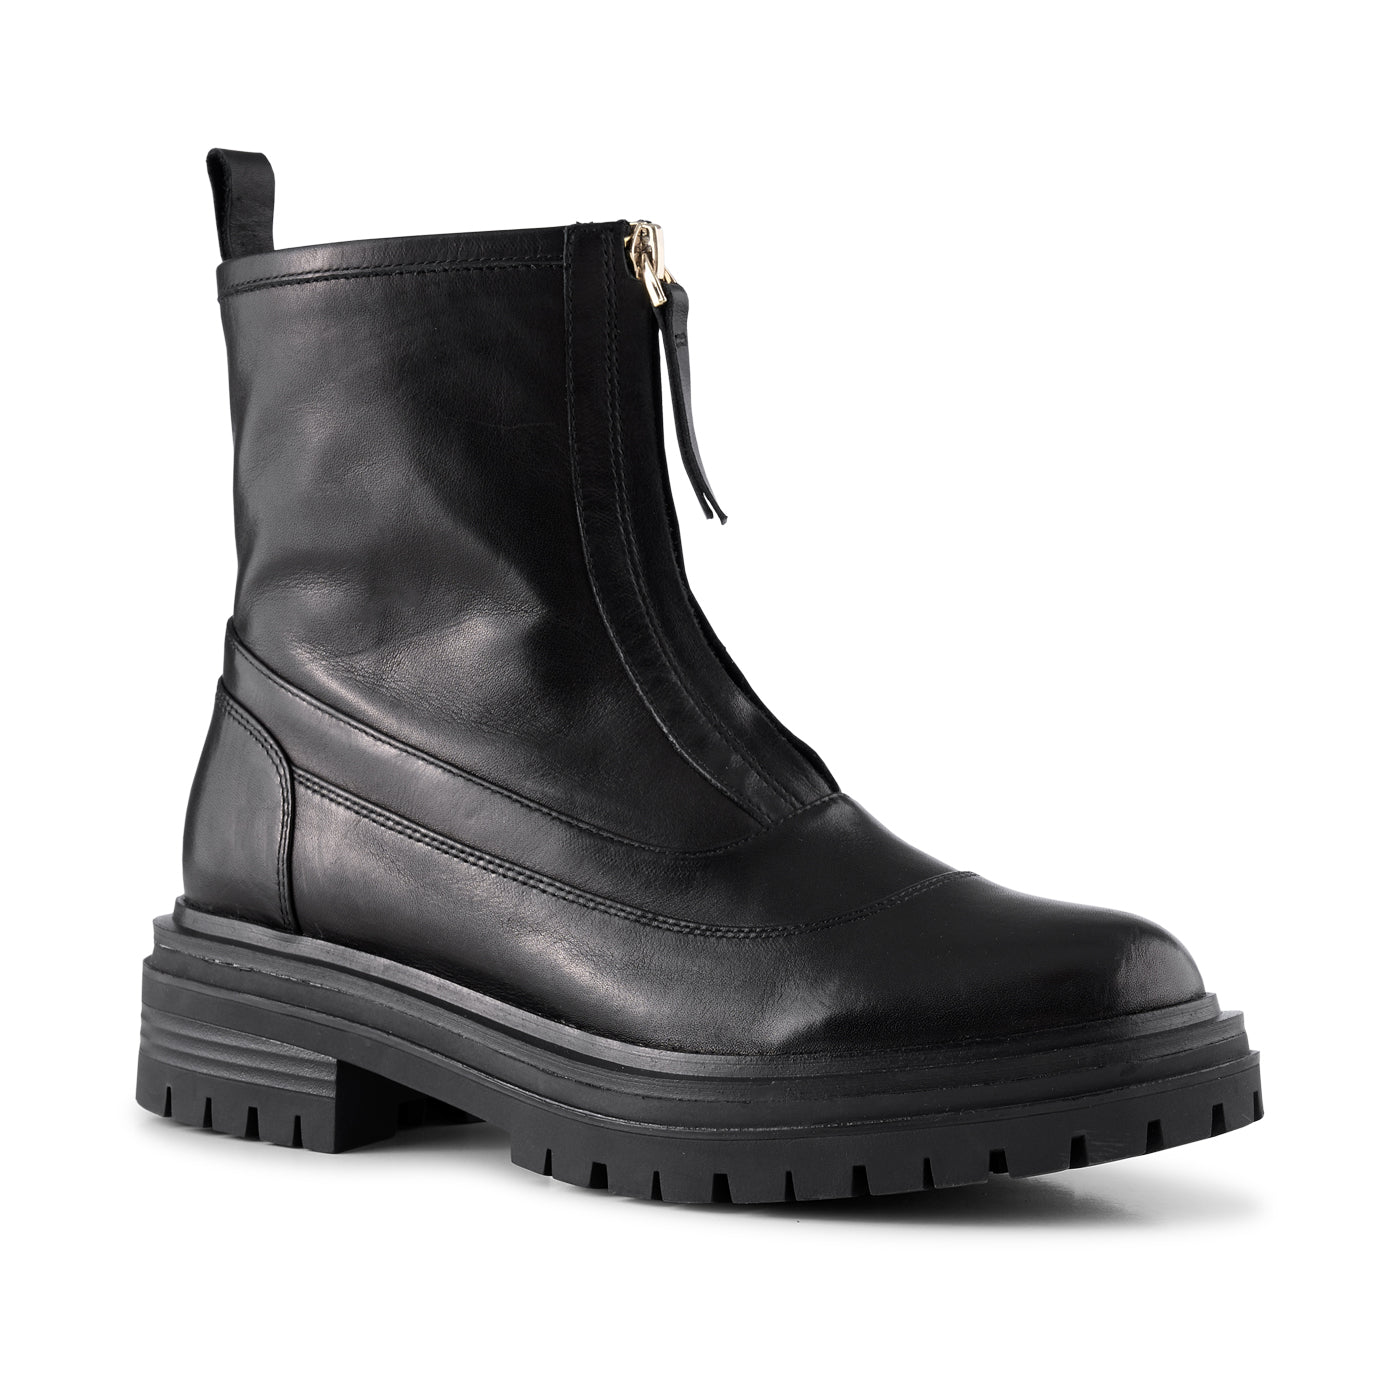 SHOE THE BEAR WOMENS Franka boot leather Boots 110 BLACK